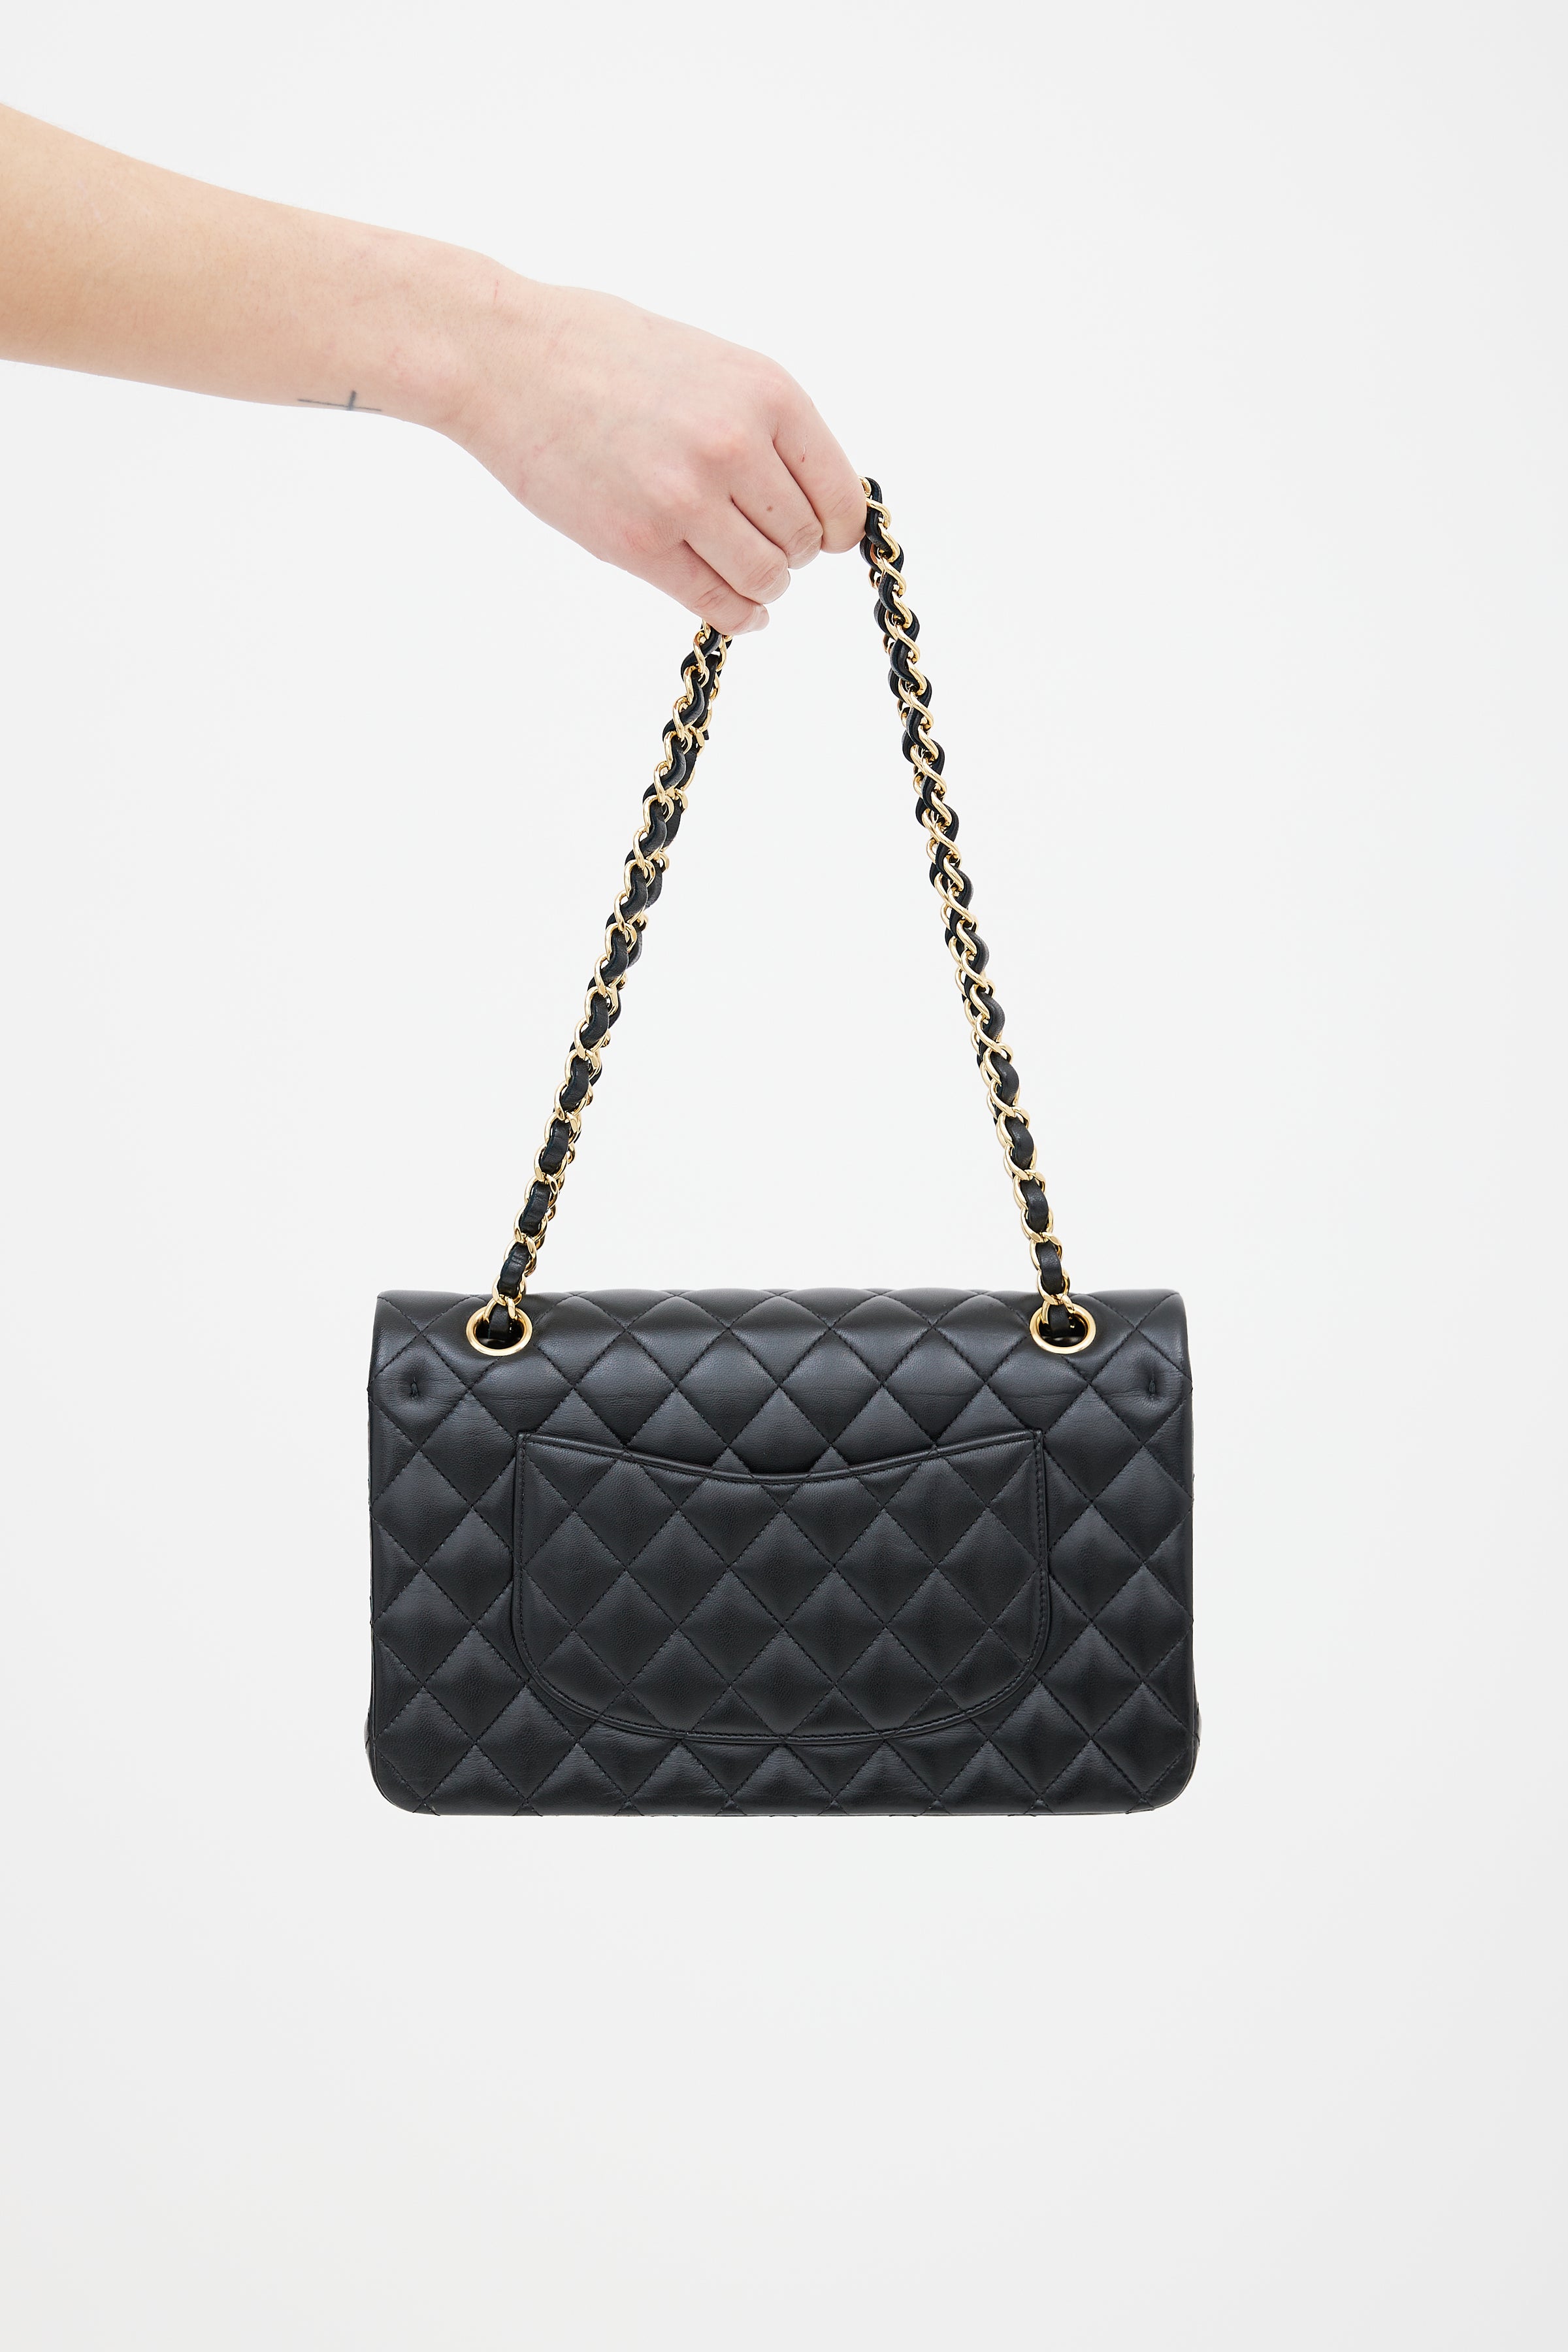 CHANEL  Bags  Chanel Classic Medium Flap Bag Brand New  Poshmark